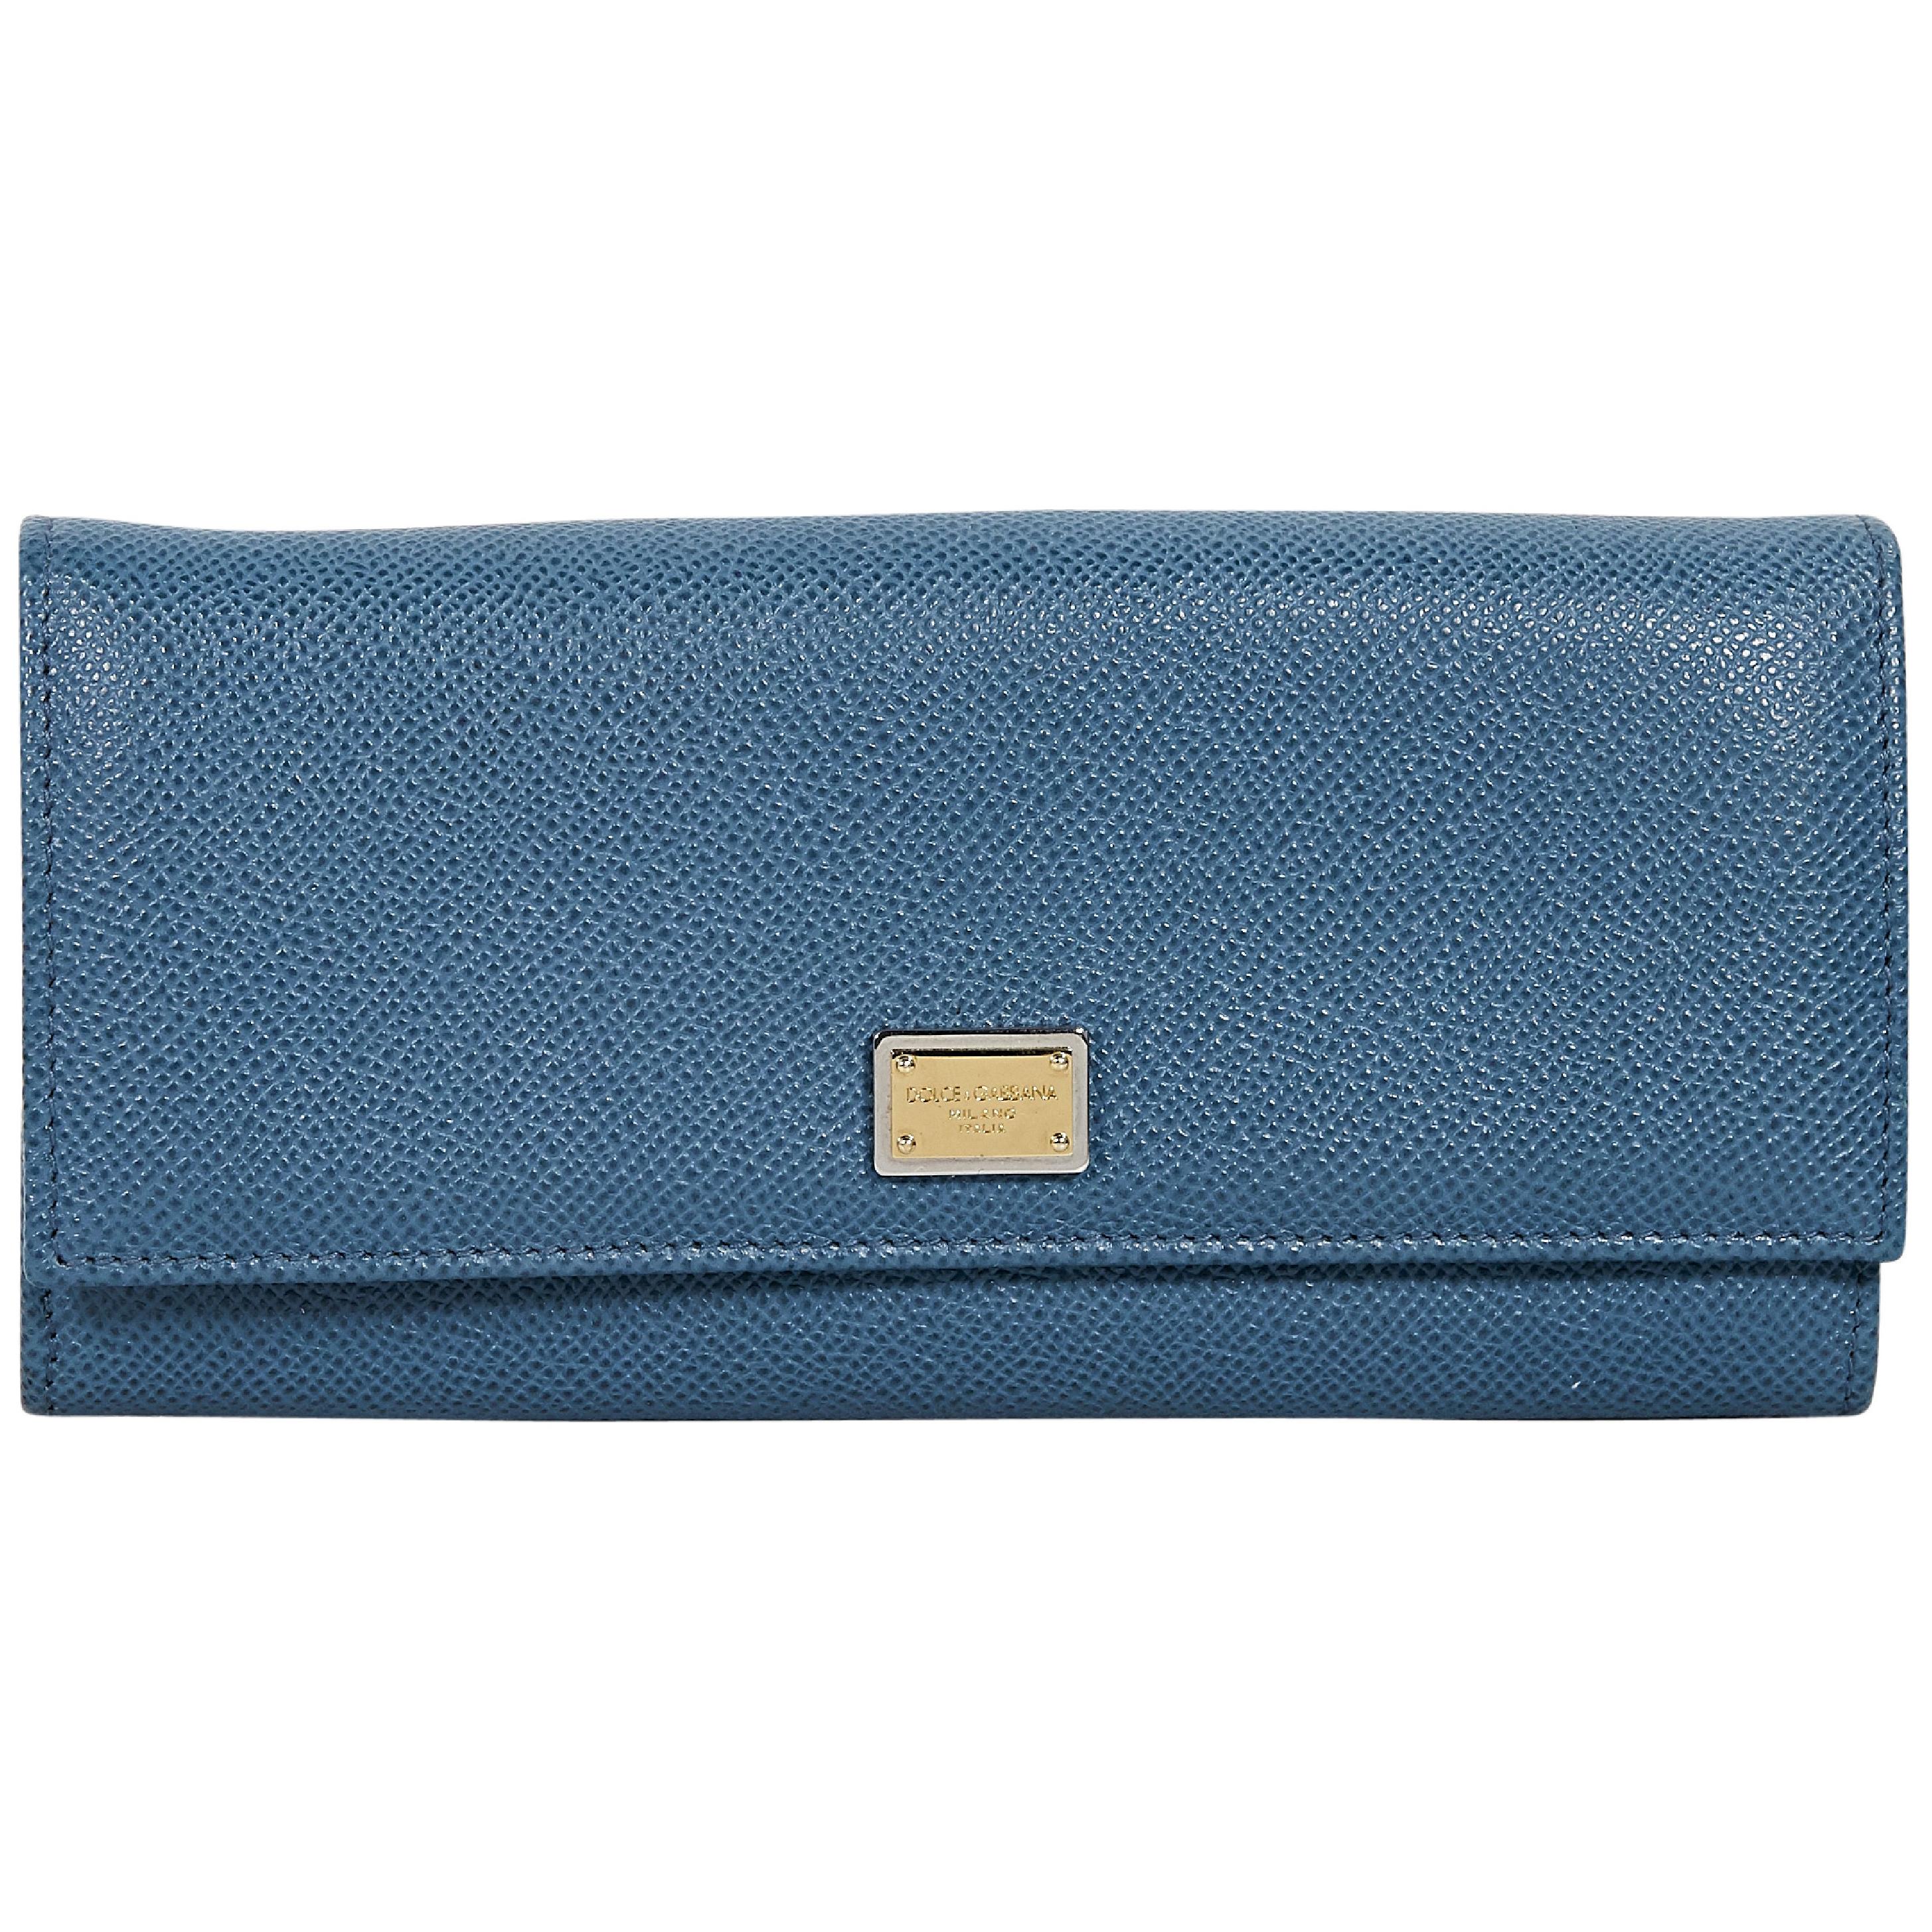 Blue Dolce & Gabbana Textured Leather Wallet